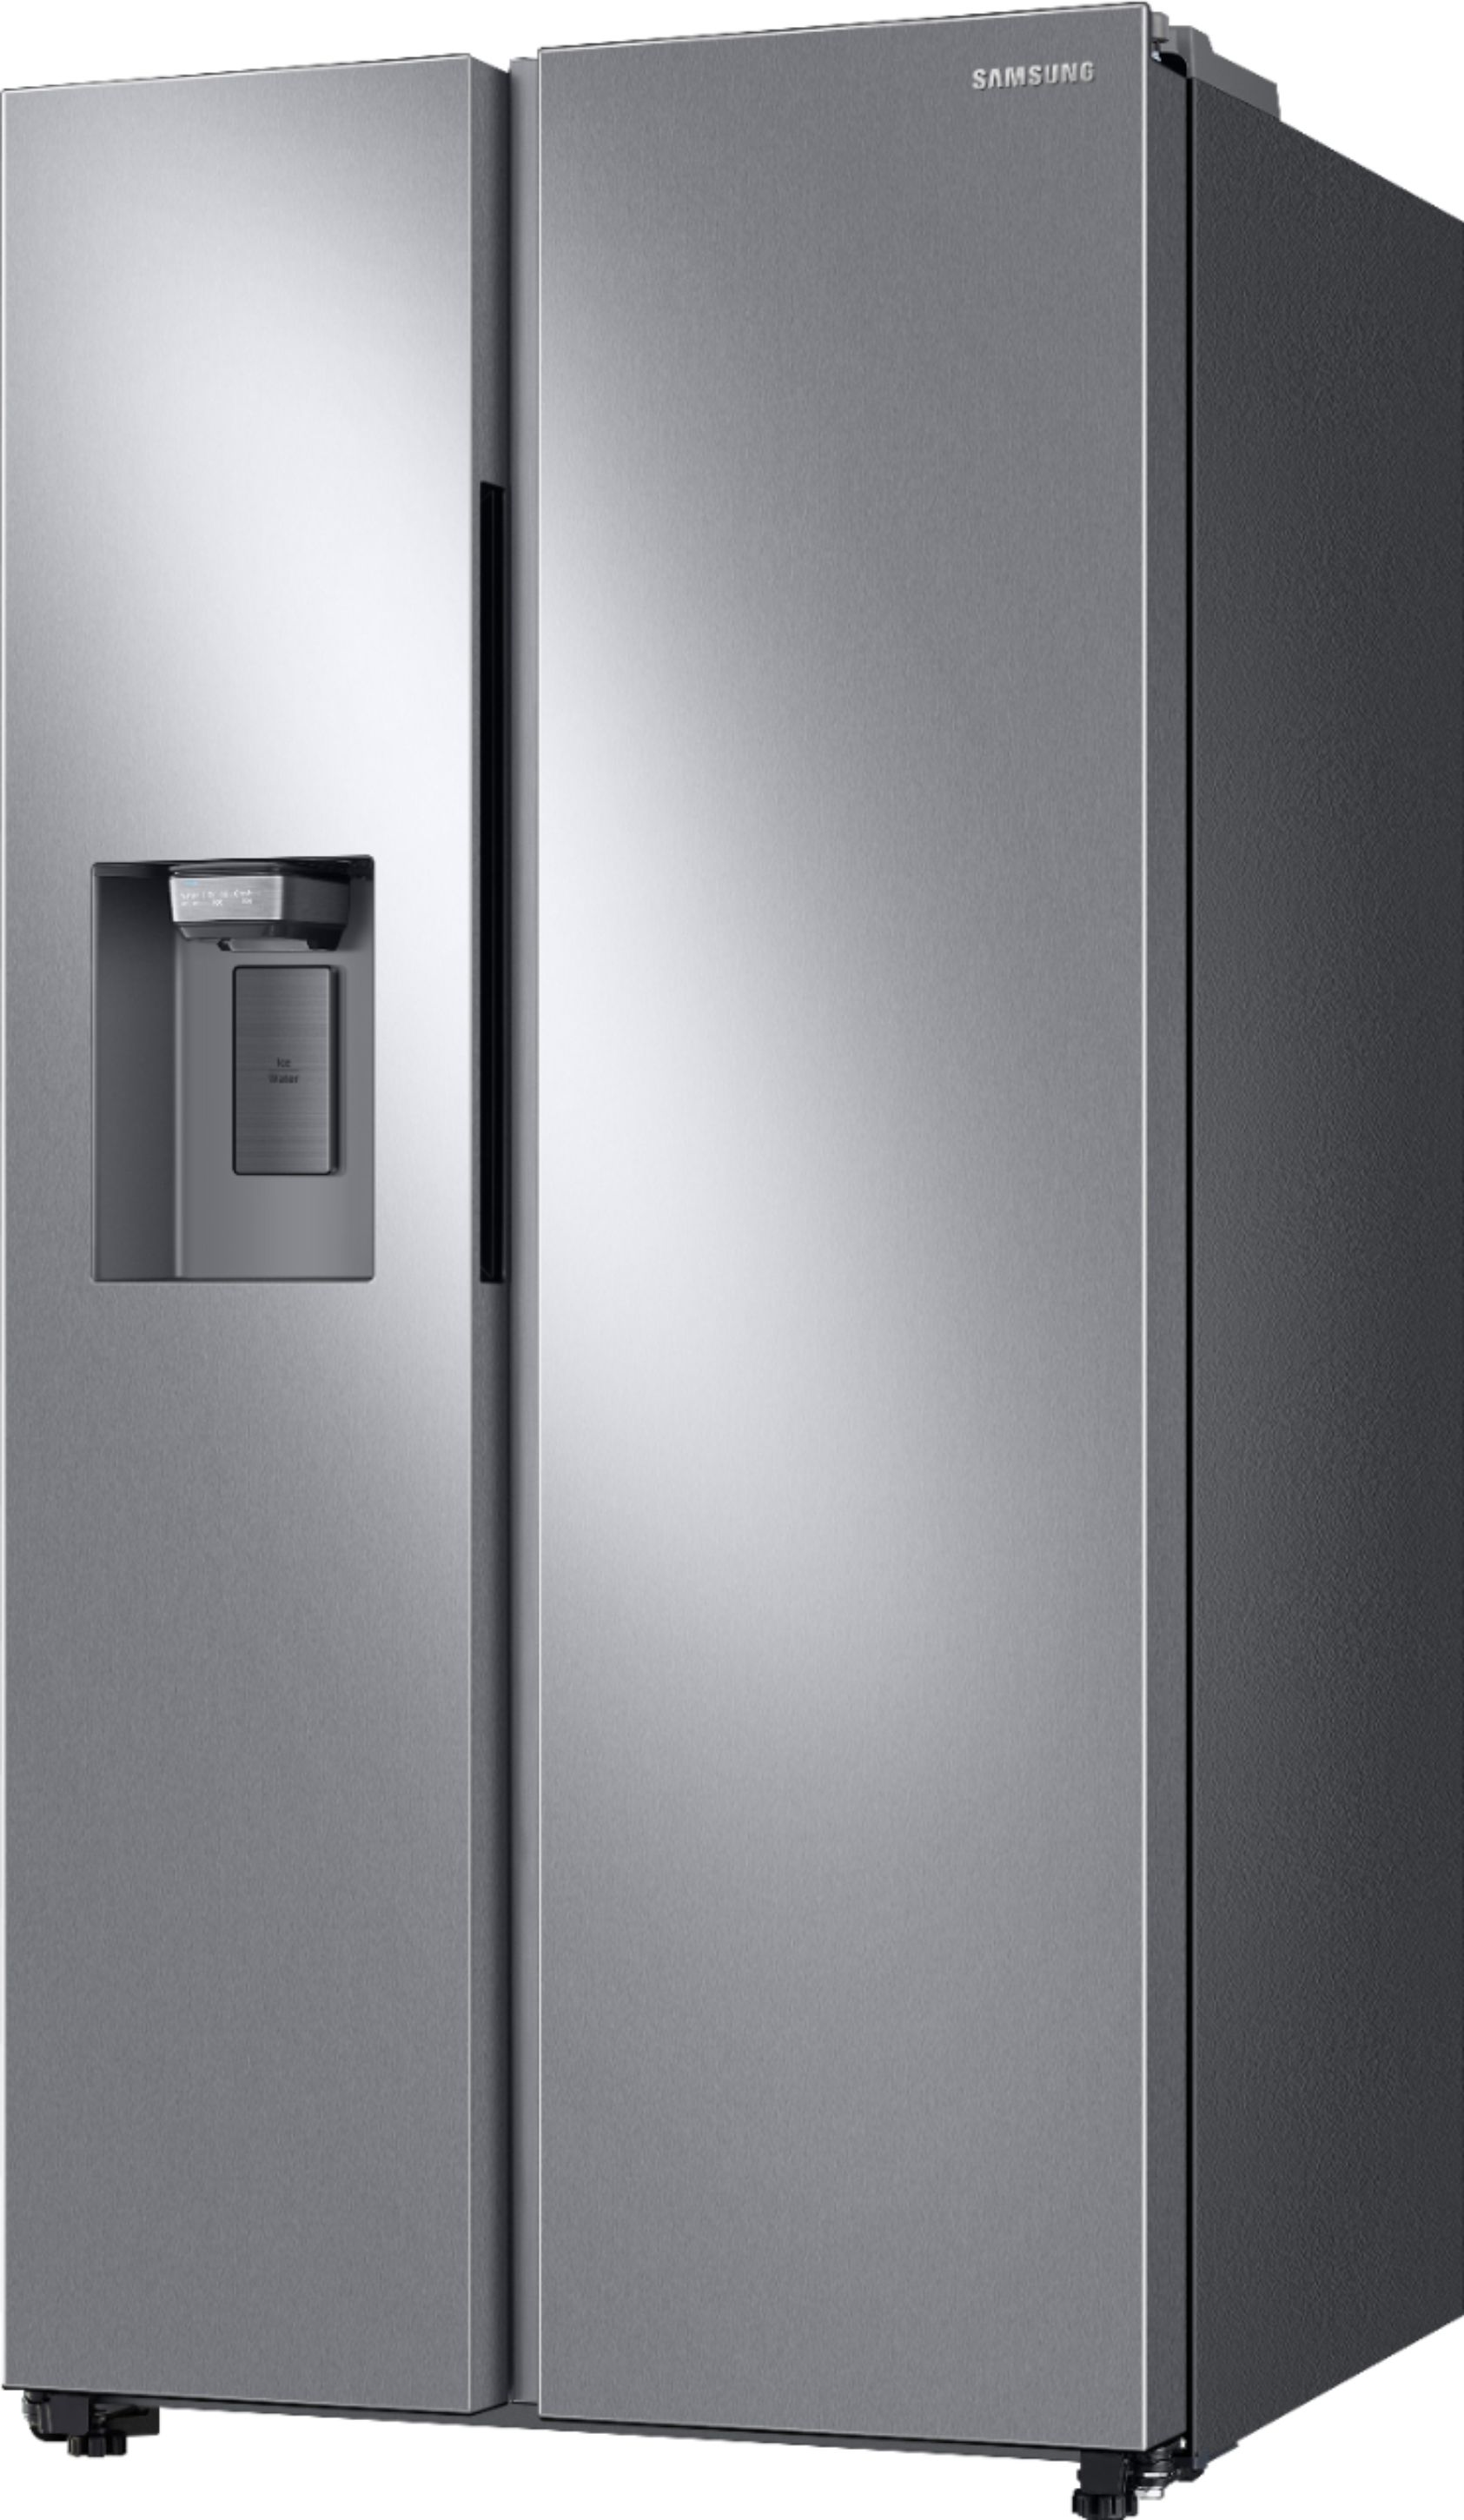 Left View: Samsung - Bespoke 11.4 cu. ft. Flex Column refrigerator - White glass